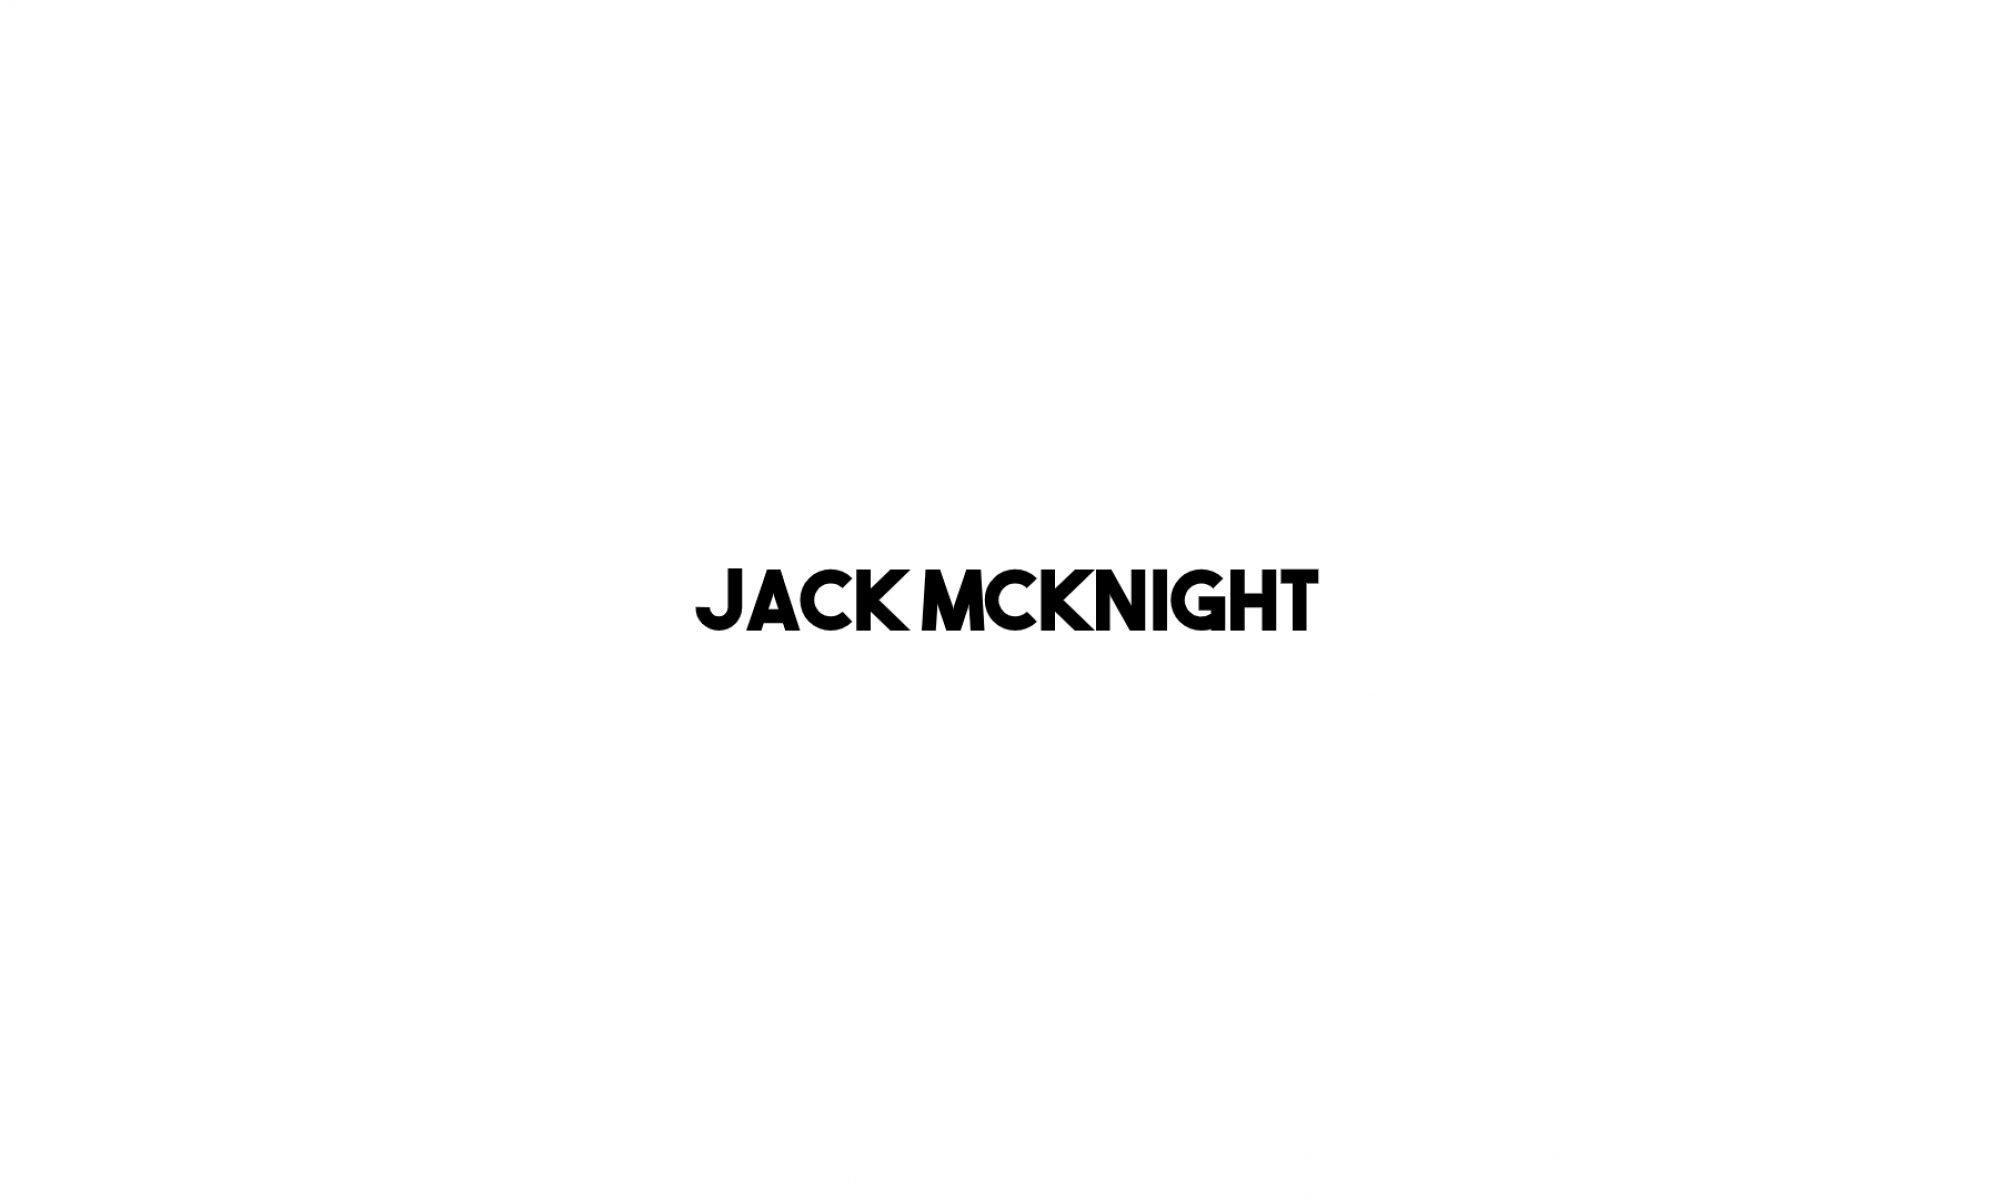 Jack McKnight